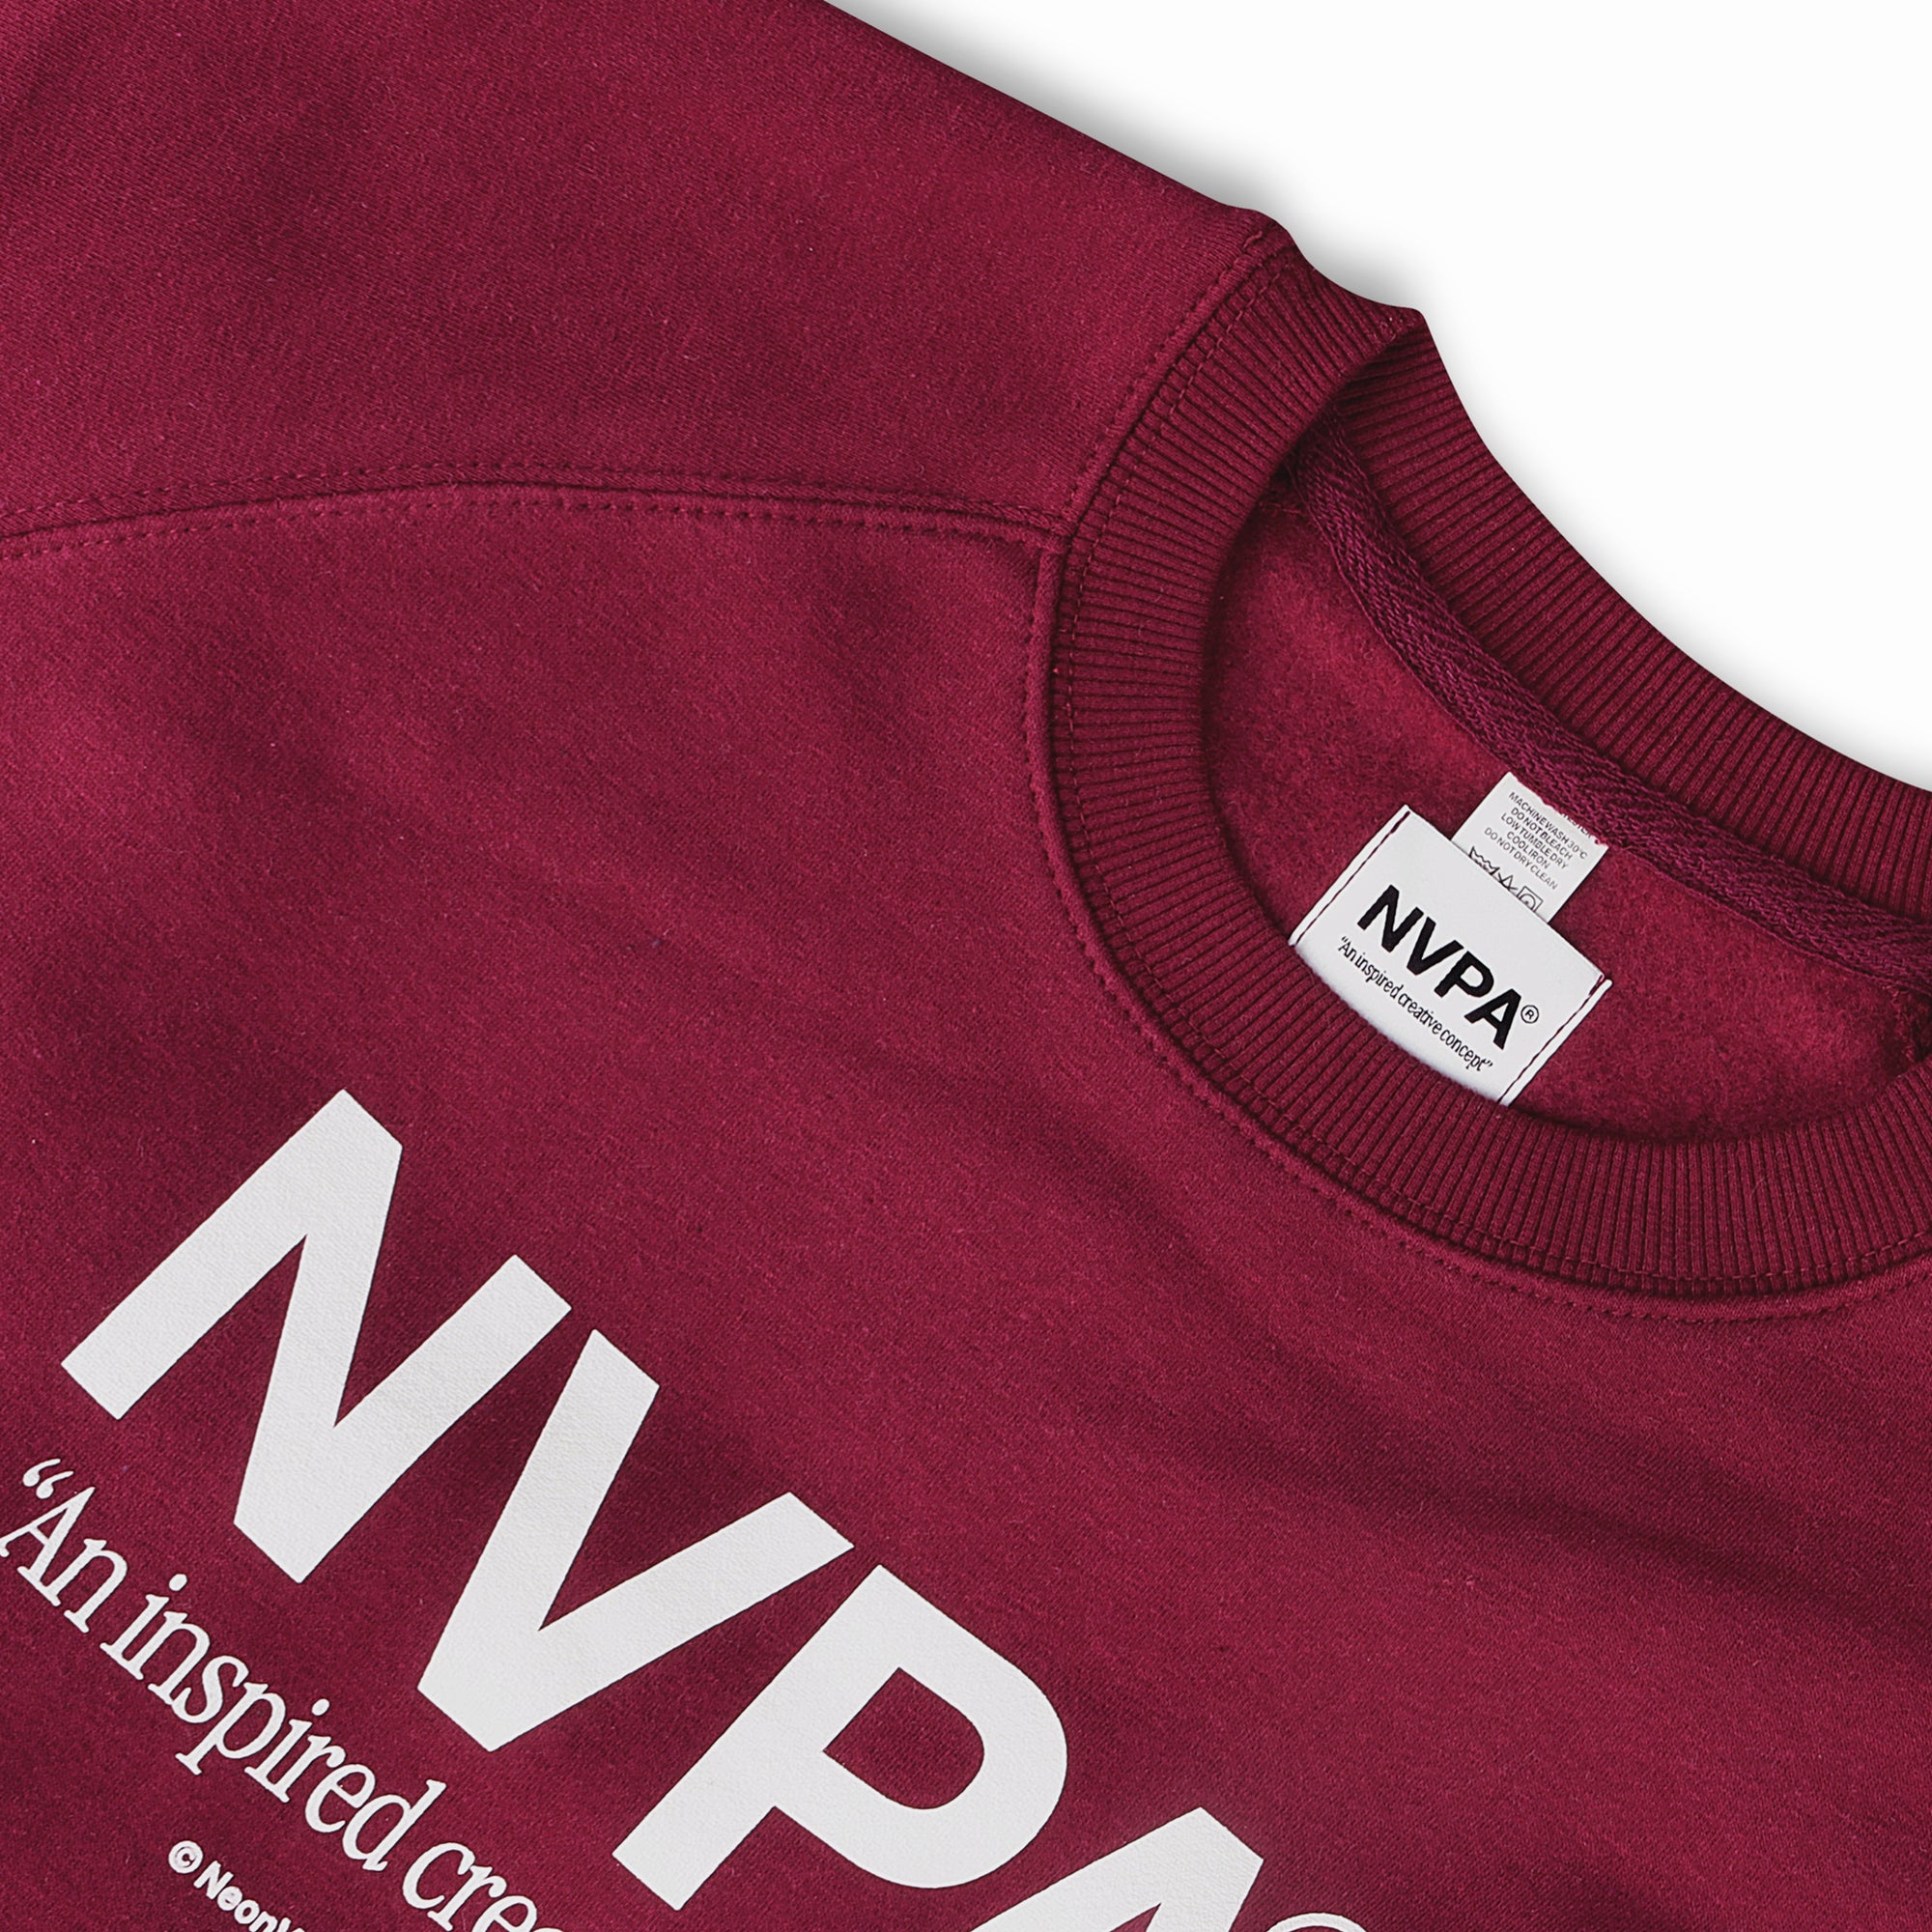 NVPA® Burgundy sweatshirt neck detail